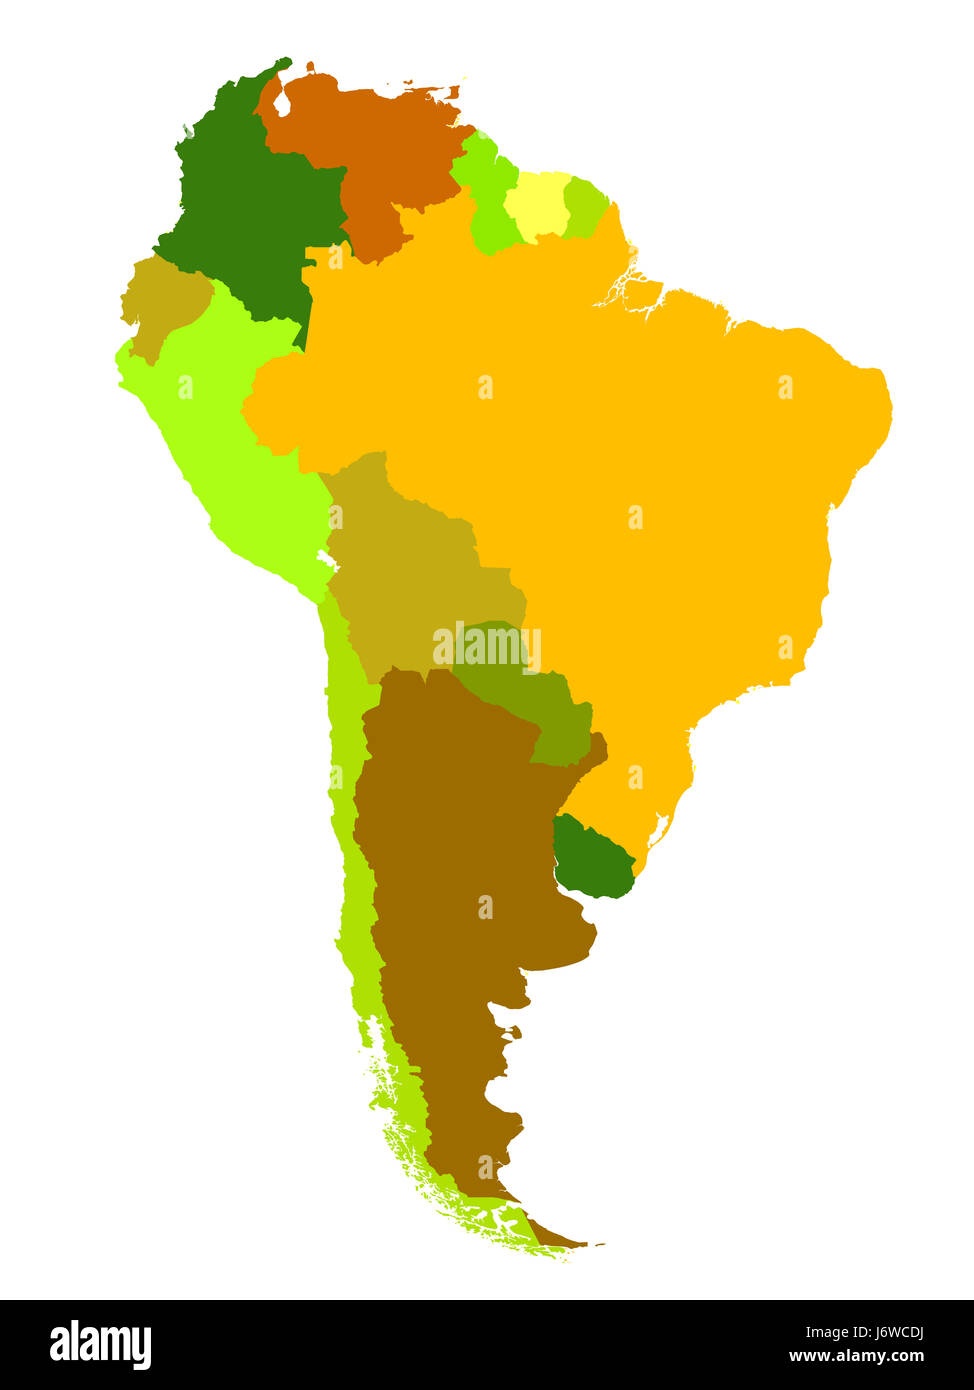 american america argentina brazil bolivia administrative map atlas map of the Stock Photo